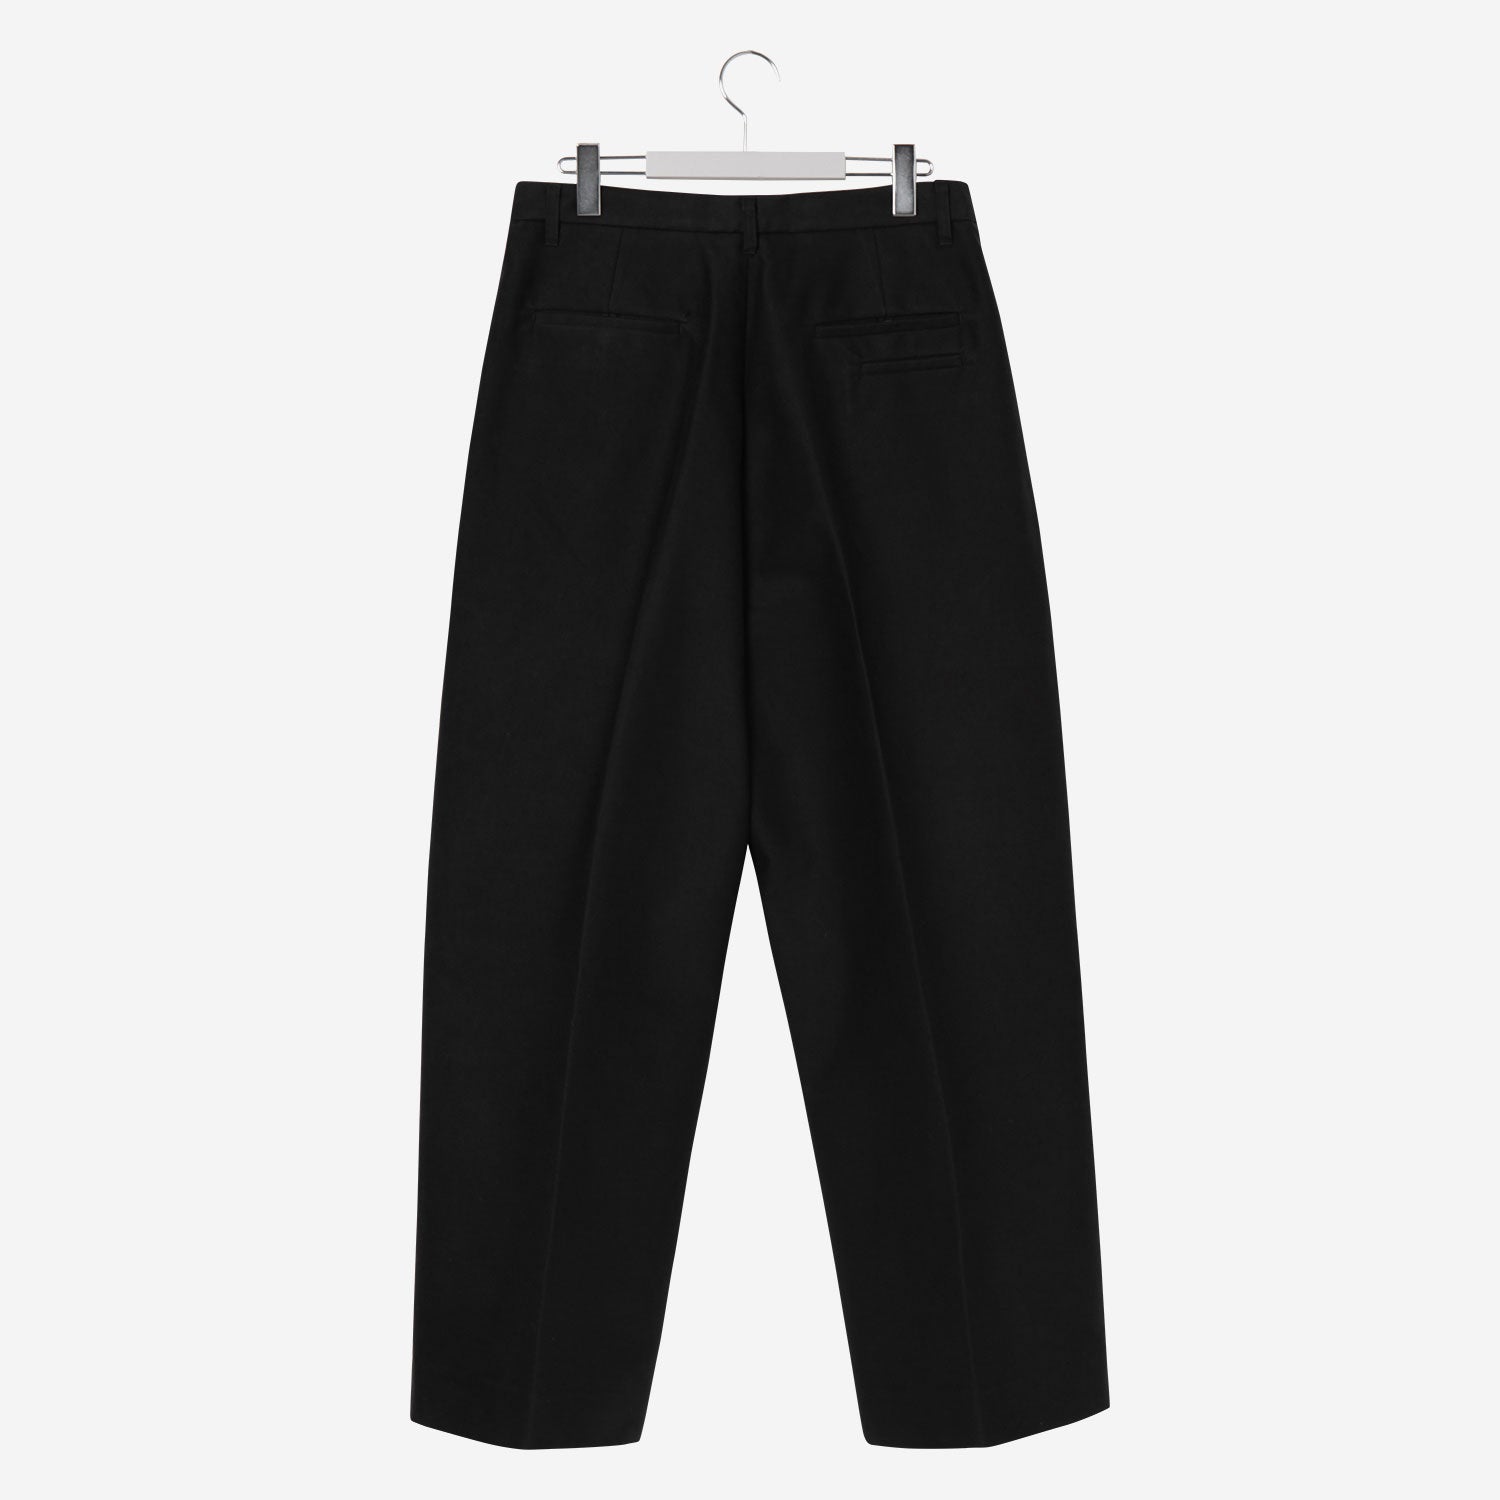 KAPOOR / Wide Tapered Pants / black